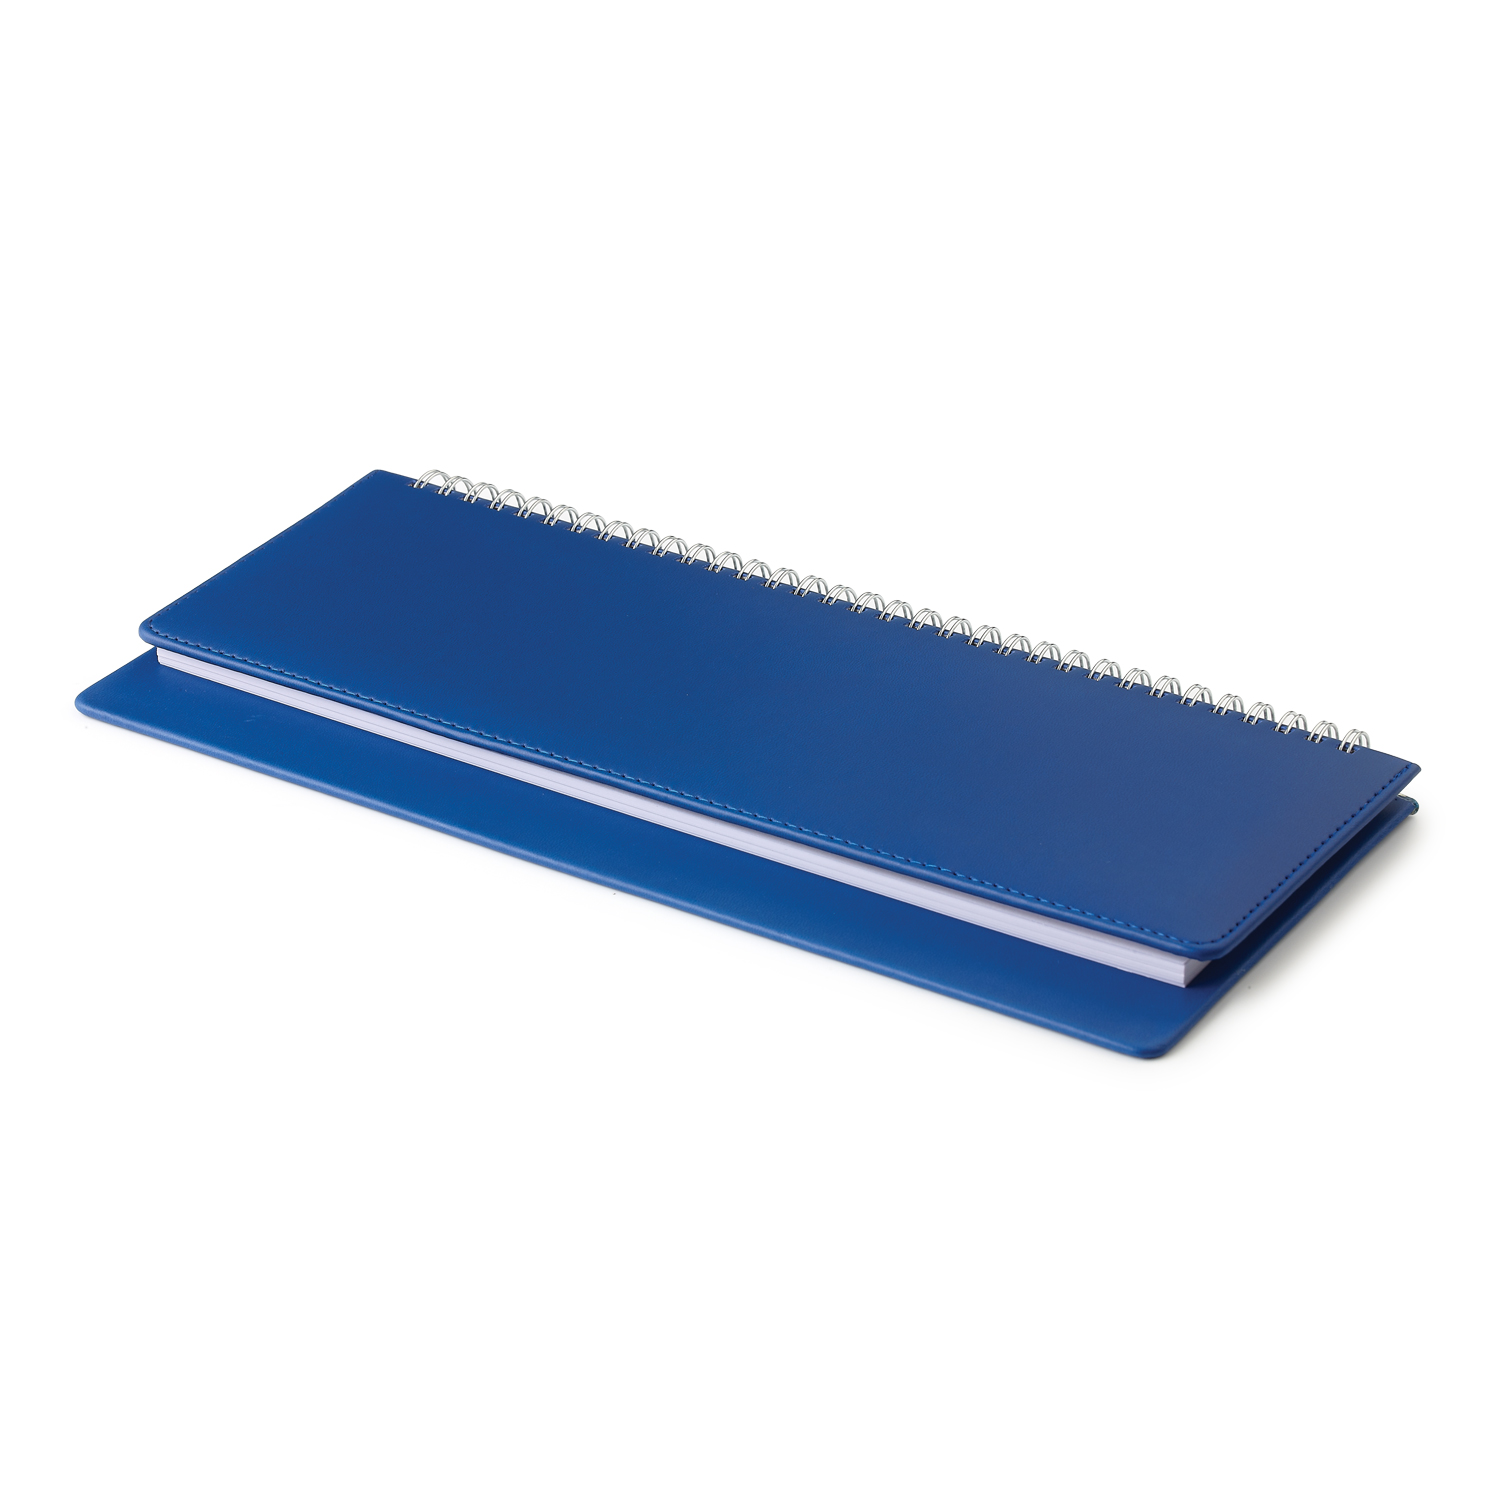 Планинг датированный, Velvet, синий, 305х130 мм, белый блок, открытый гребень